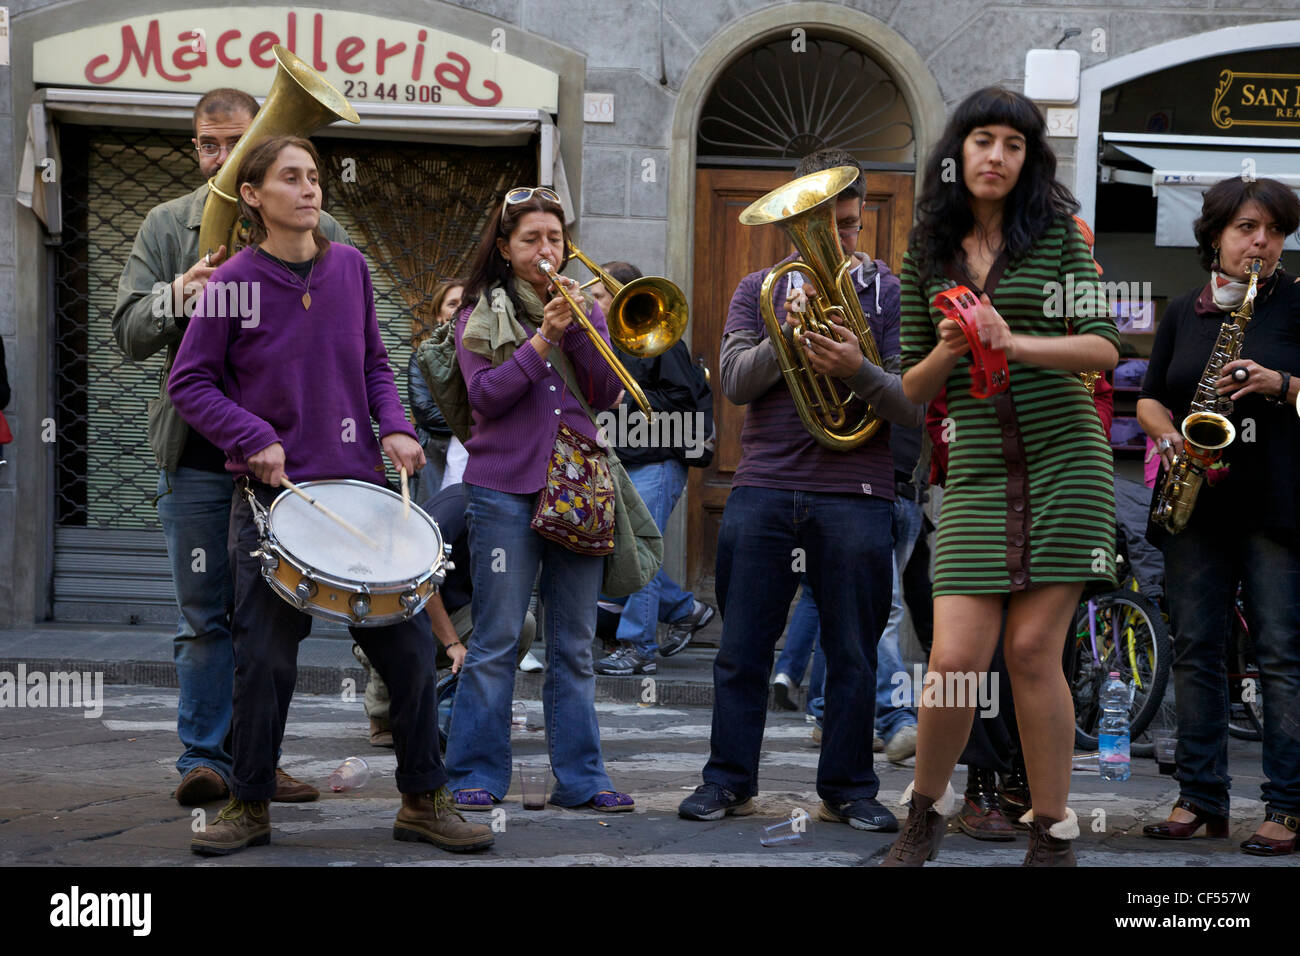 Fiati Sprecati, popular street band, perform in streets of Florence, Tuscany, Italy, Europe Stock Photo